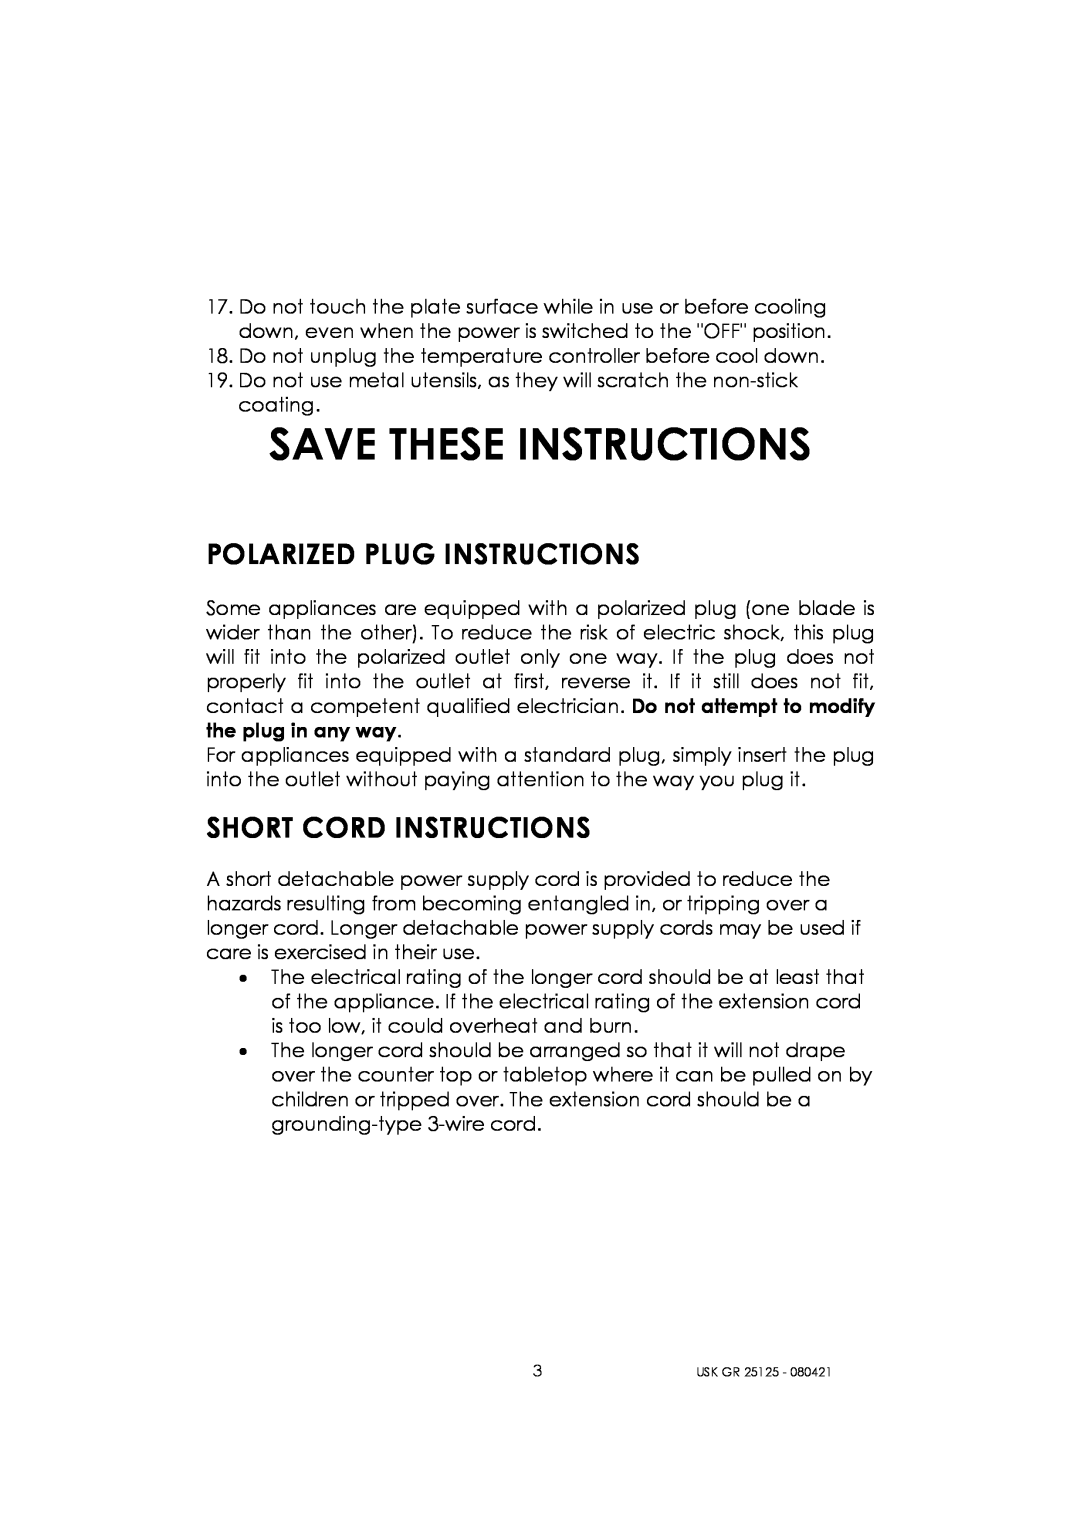 Kalorik USK GR 25125 manual Save These Instructions, Polarized Plug Instructions, Short Cord Instructions 